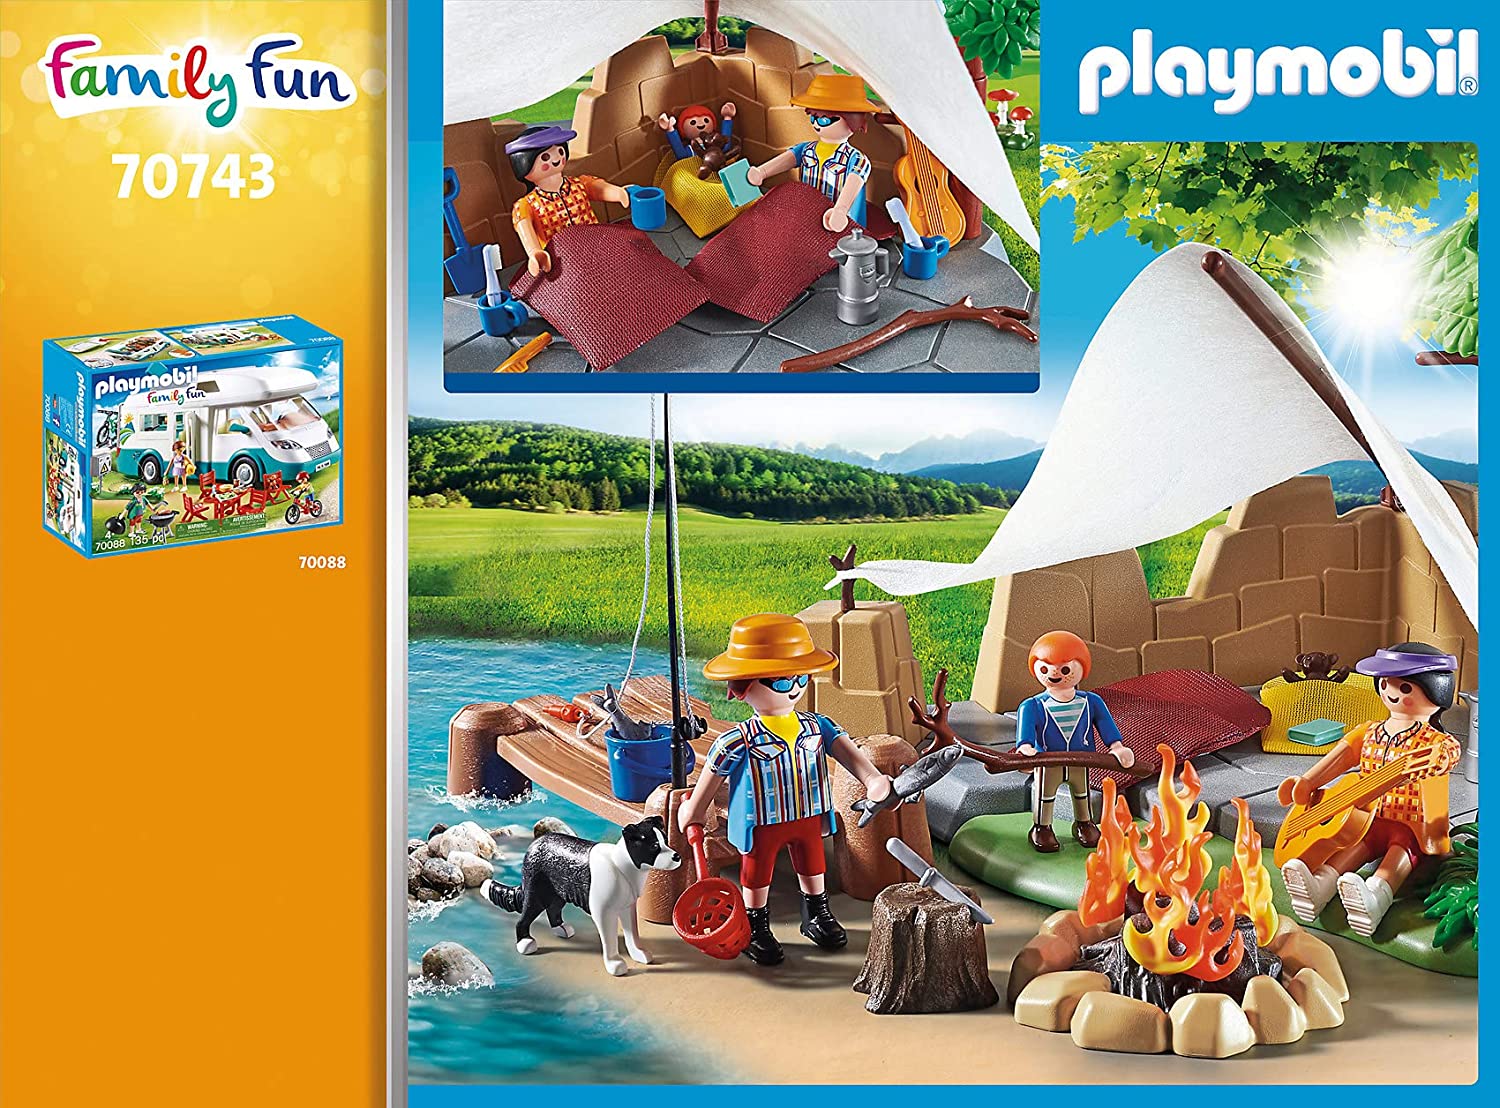 Playmobil Family Fun Toy Camper Van with Furniture 70088